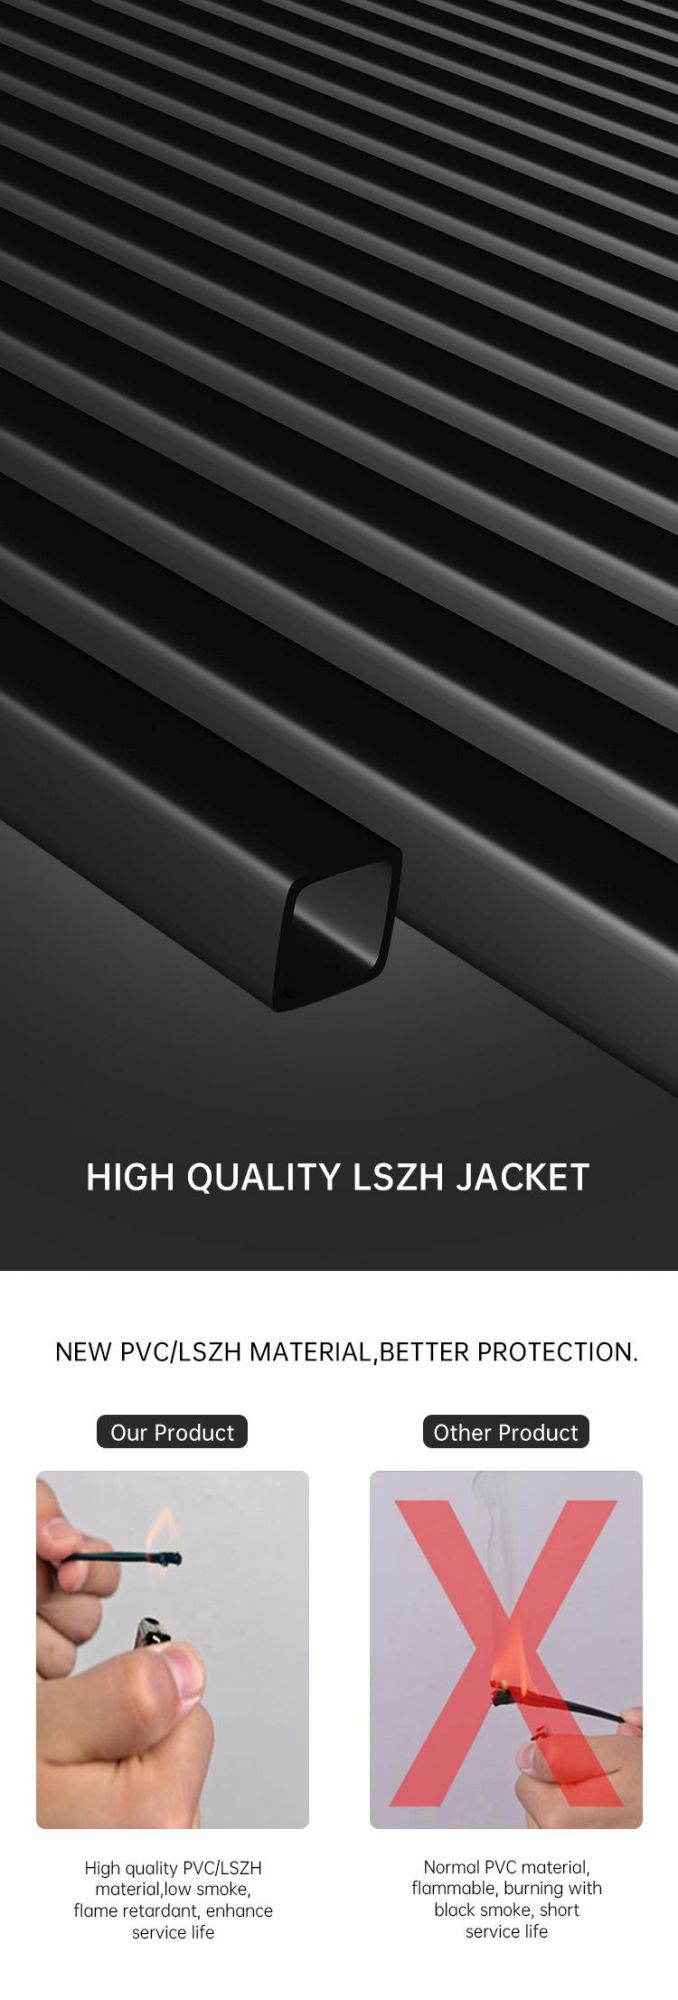 Single Core Double Jacket Simplex LSZH Anatel FTTH Drop Wire Fiber Optical Cable for Outdoor